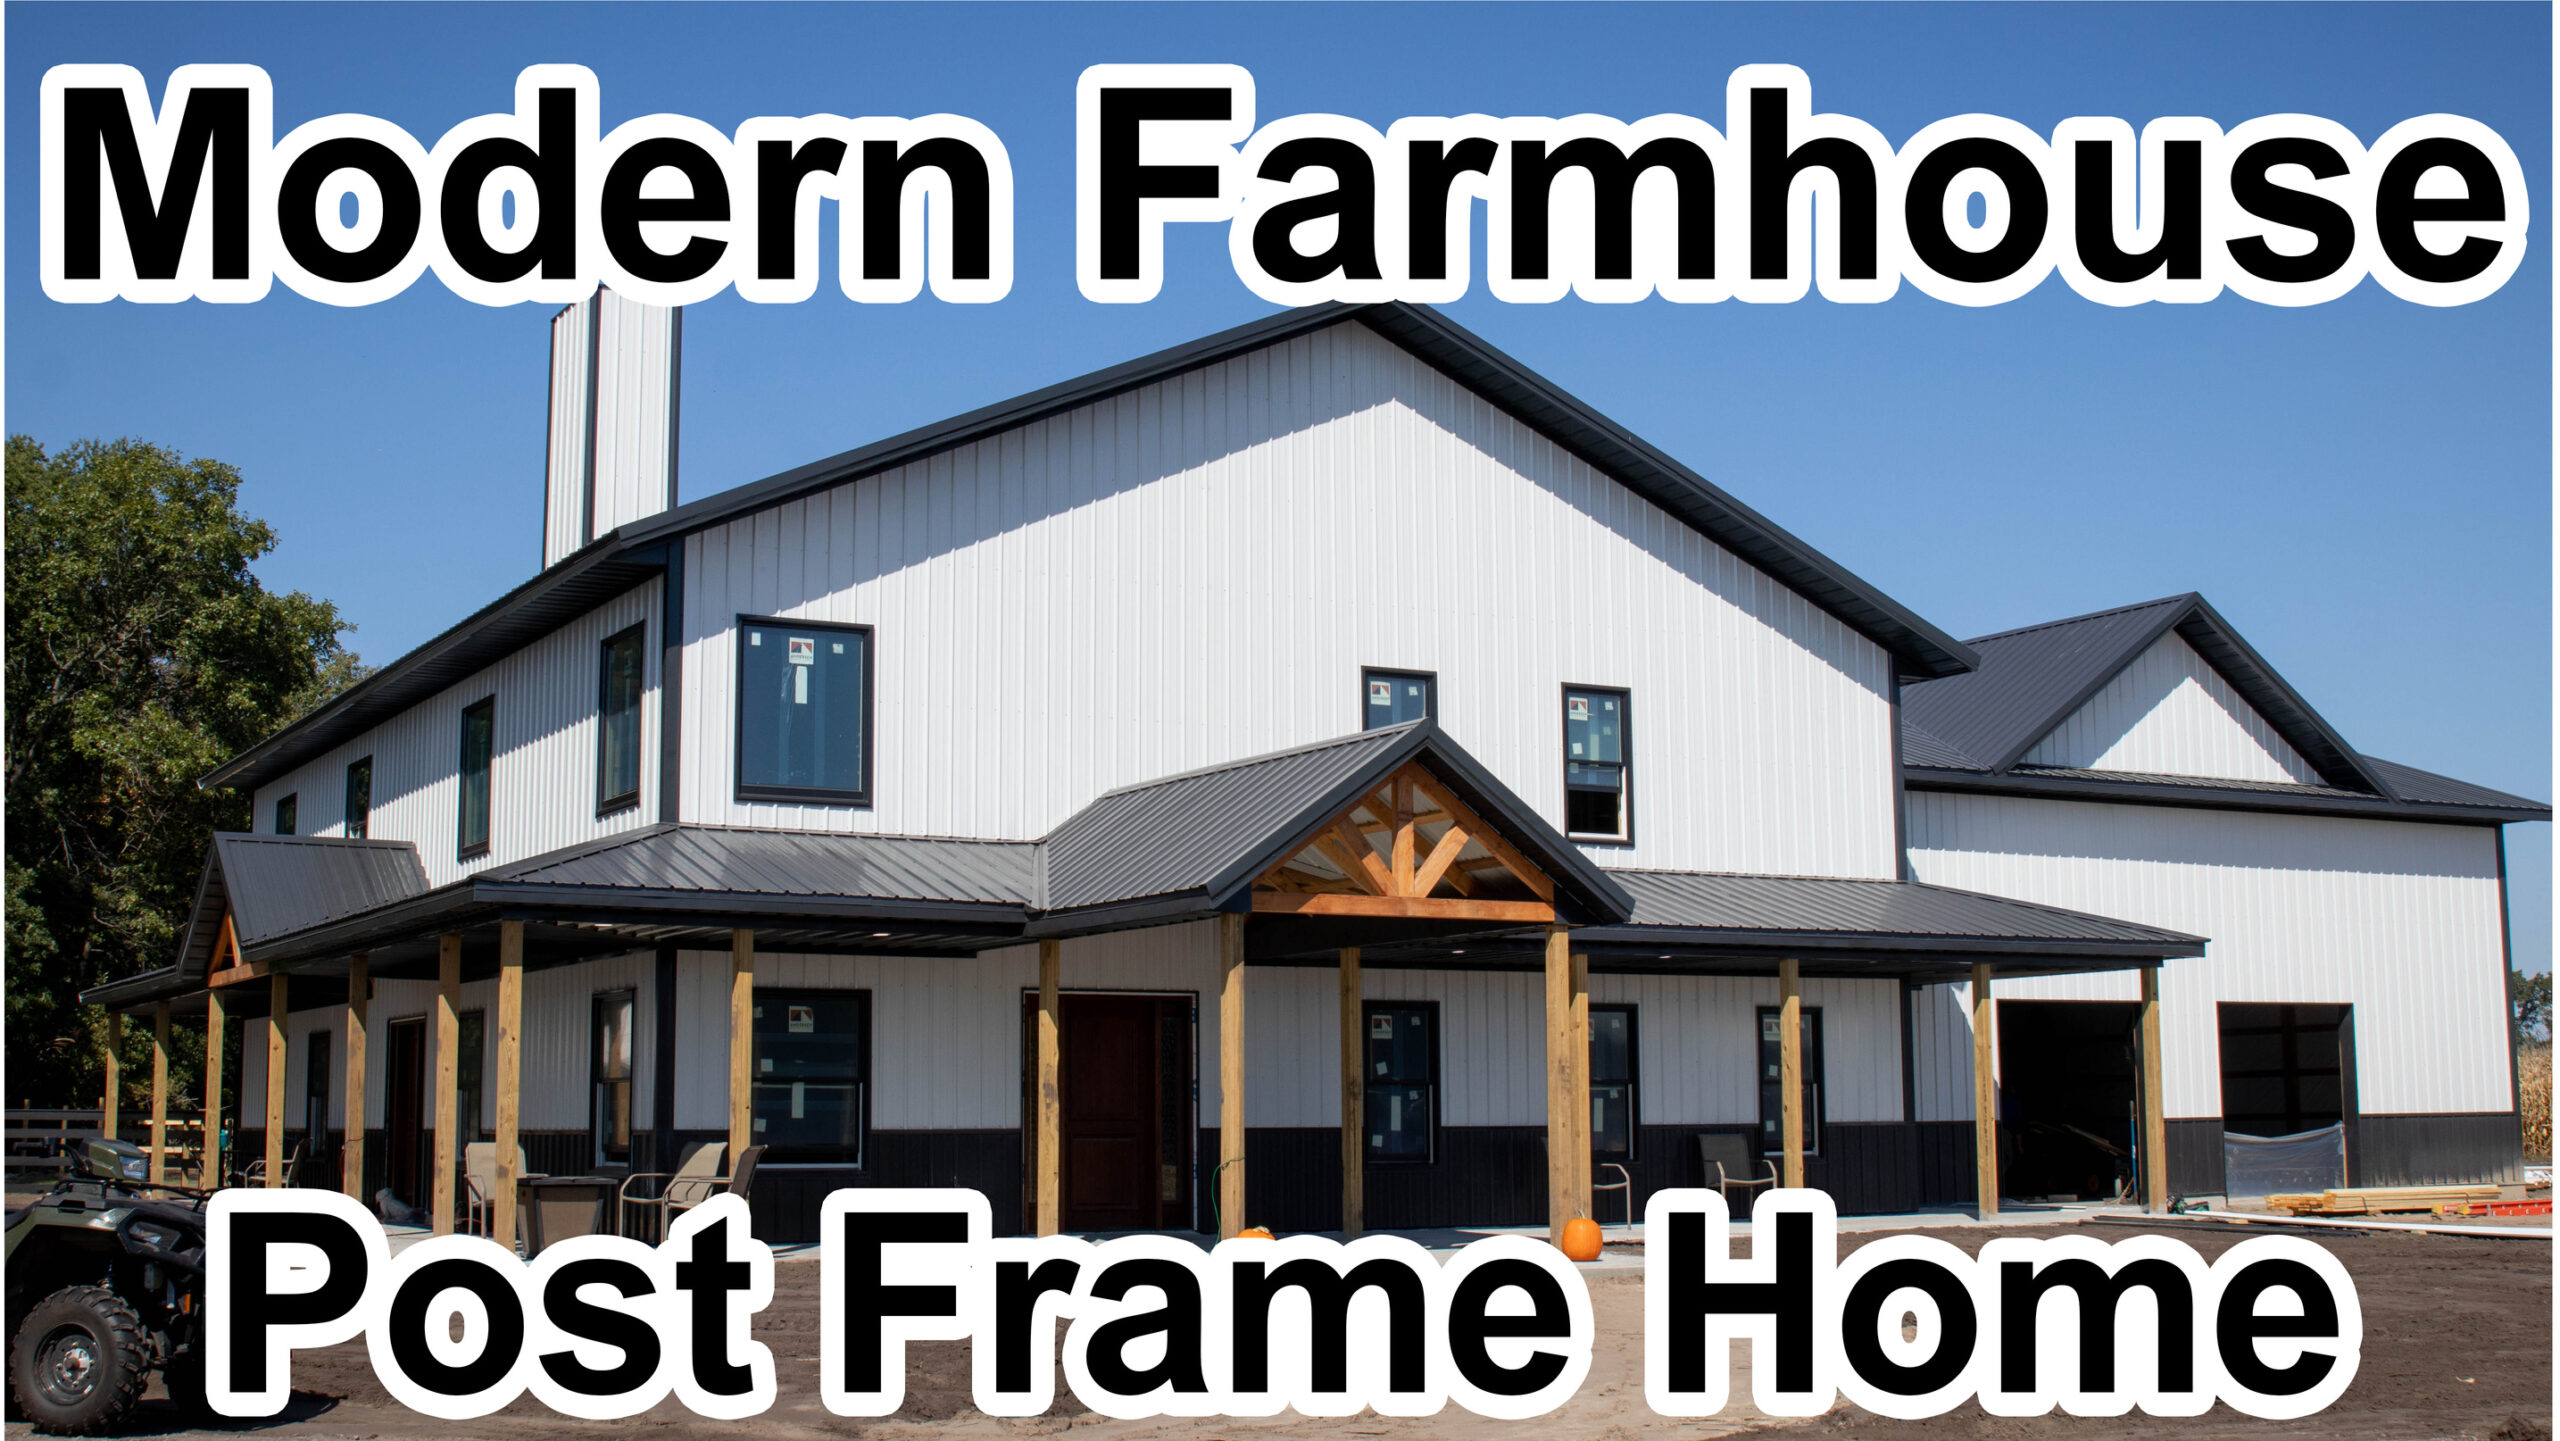 Modern Farmhouse Build - Image